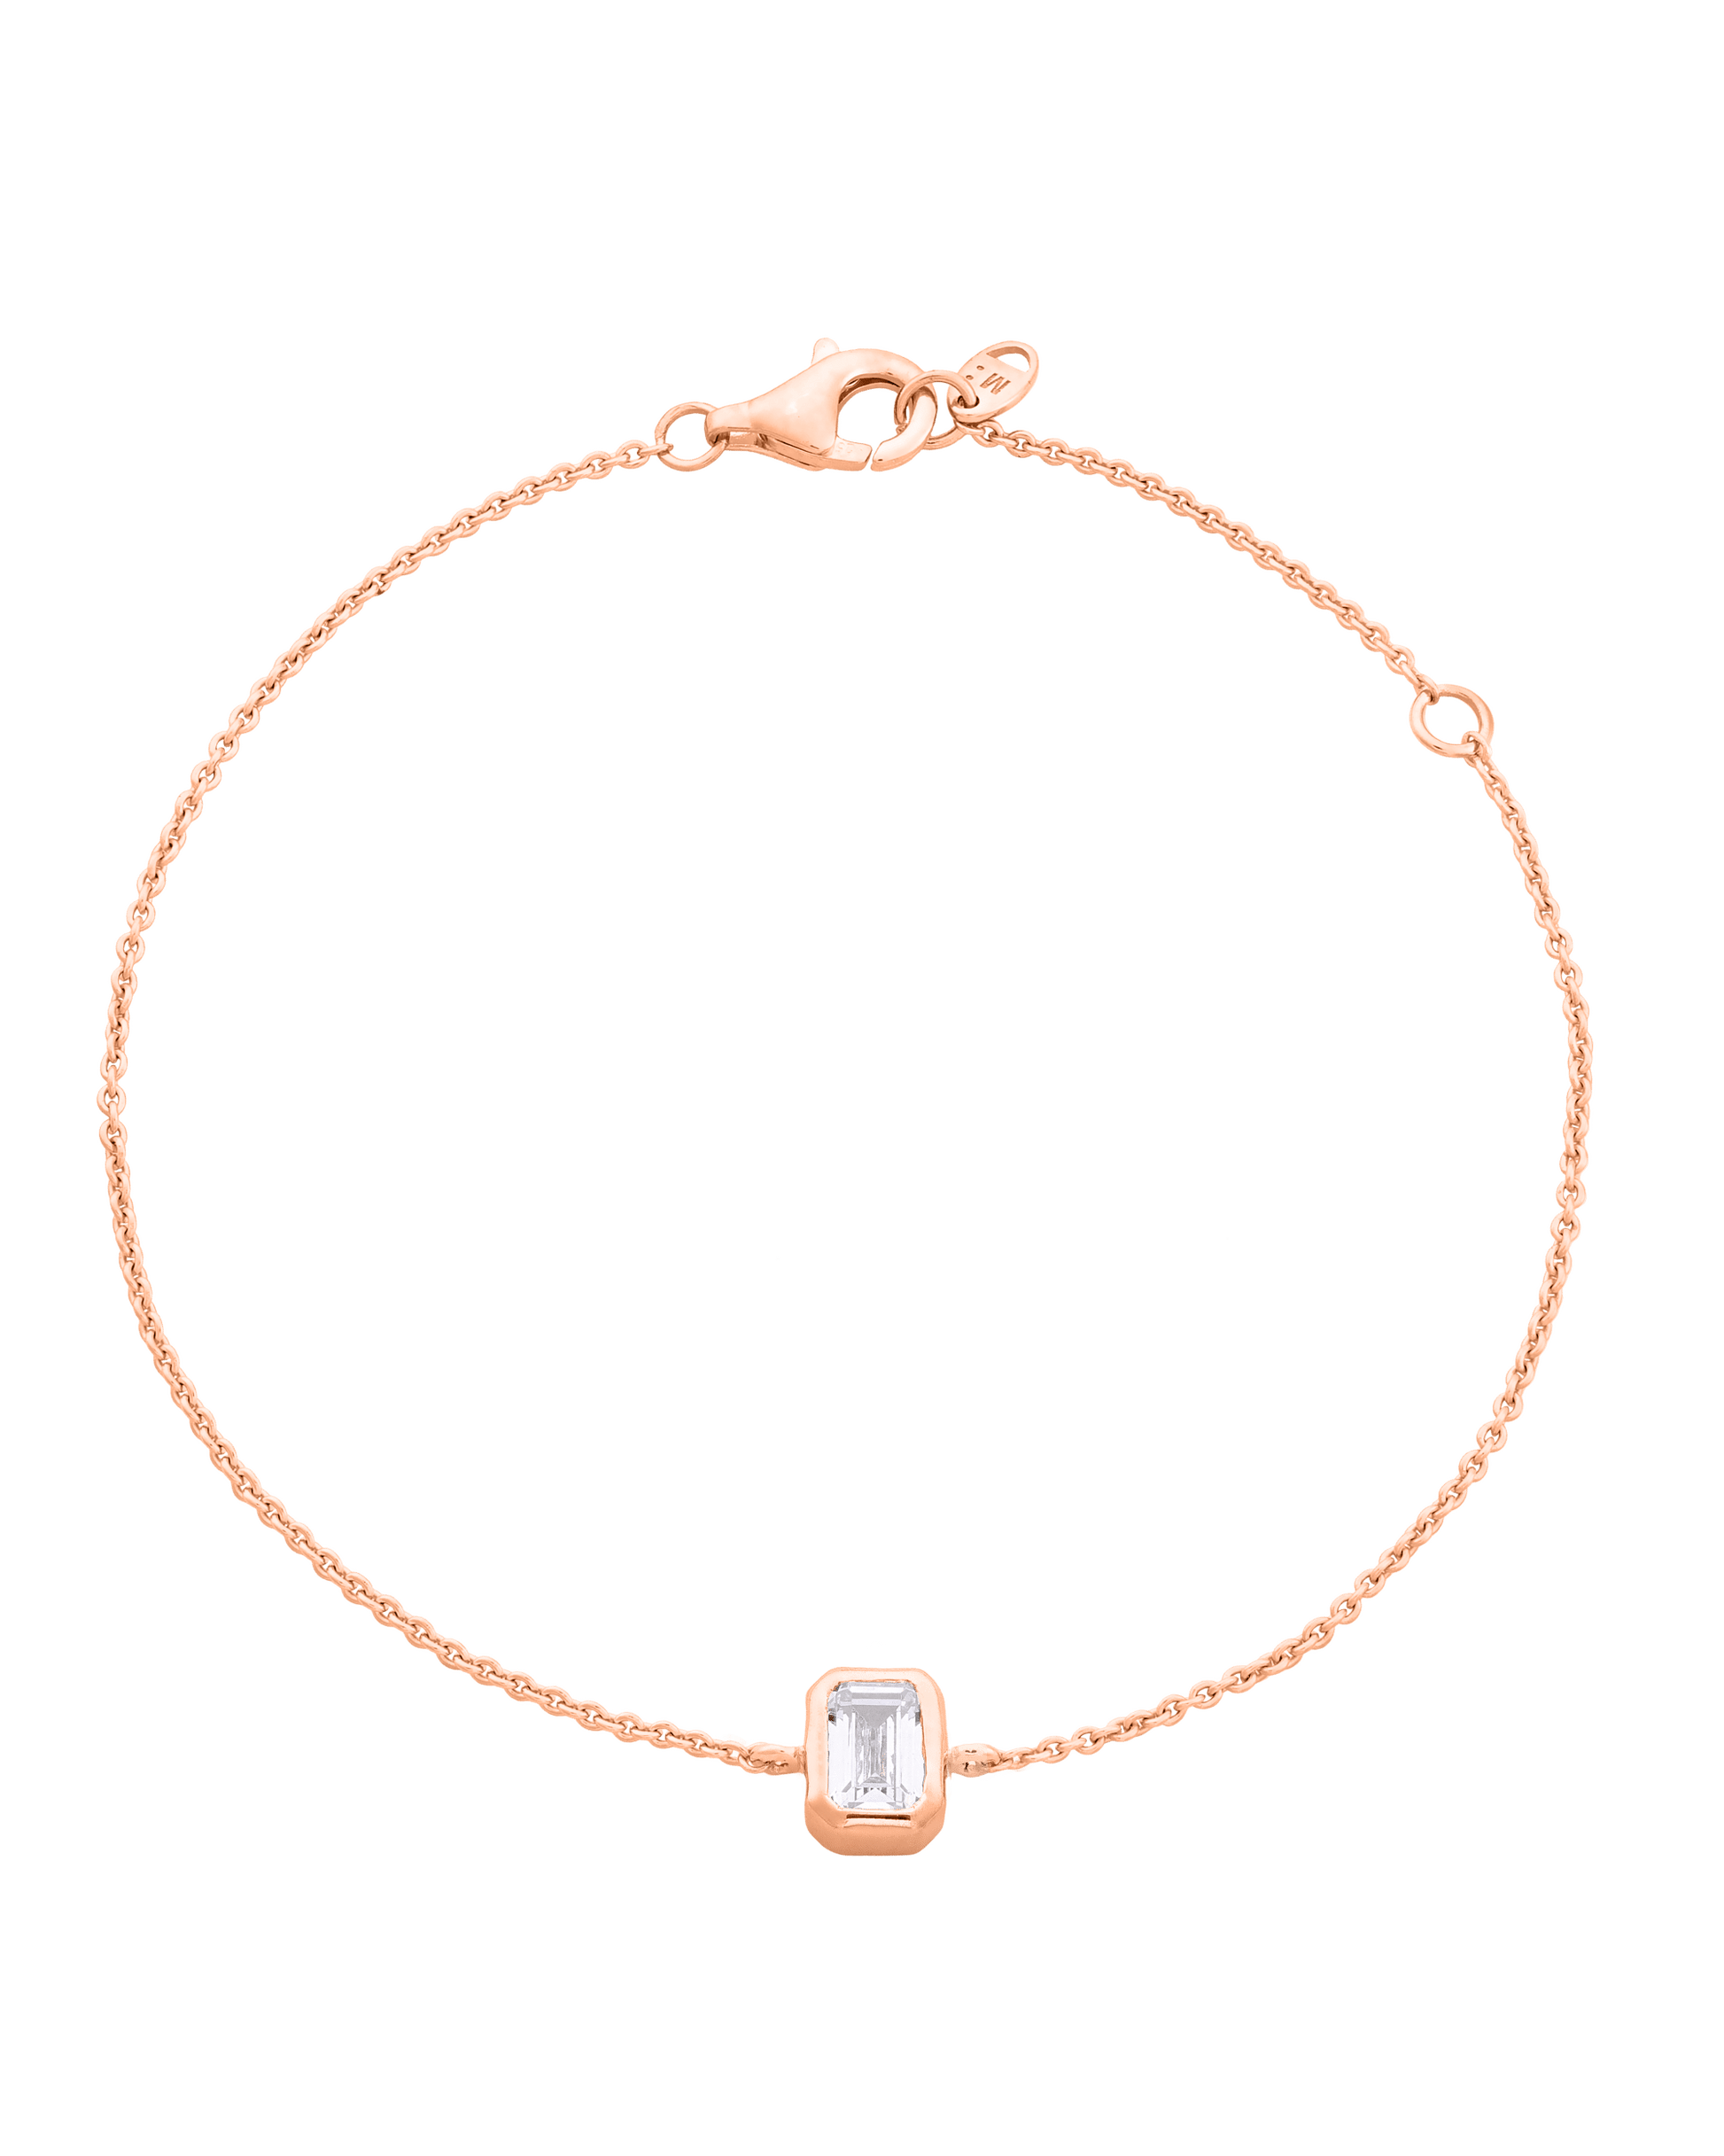 Emerald Solitaire Diamond Bracelet - 14K White Gold Bracelets magal-dev 